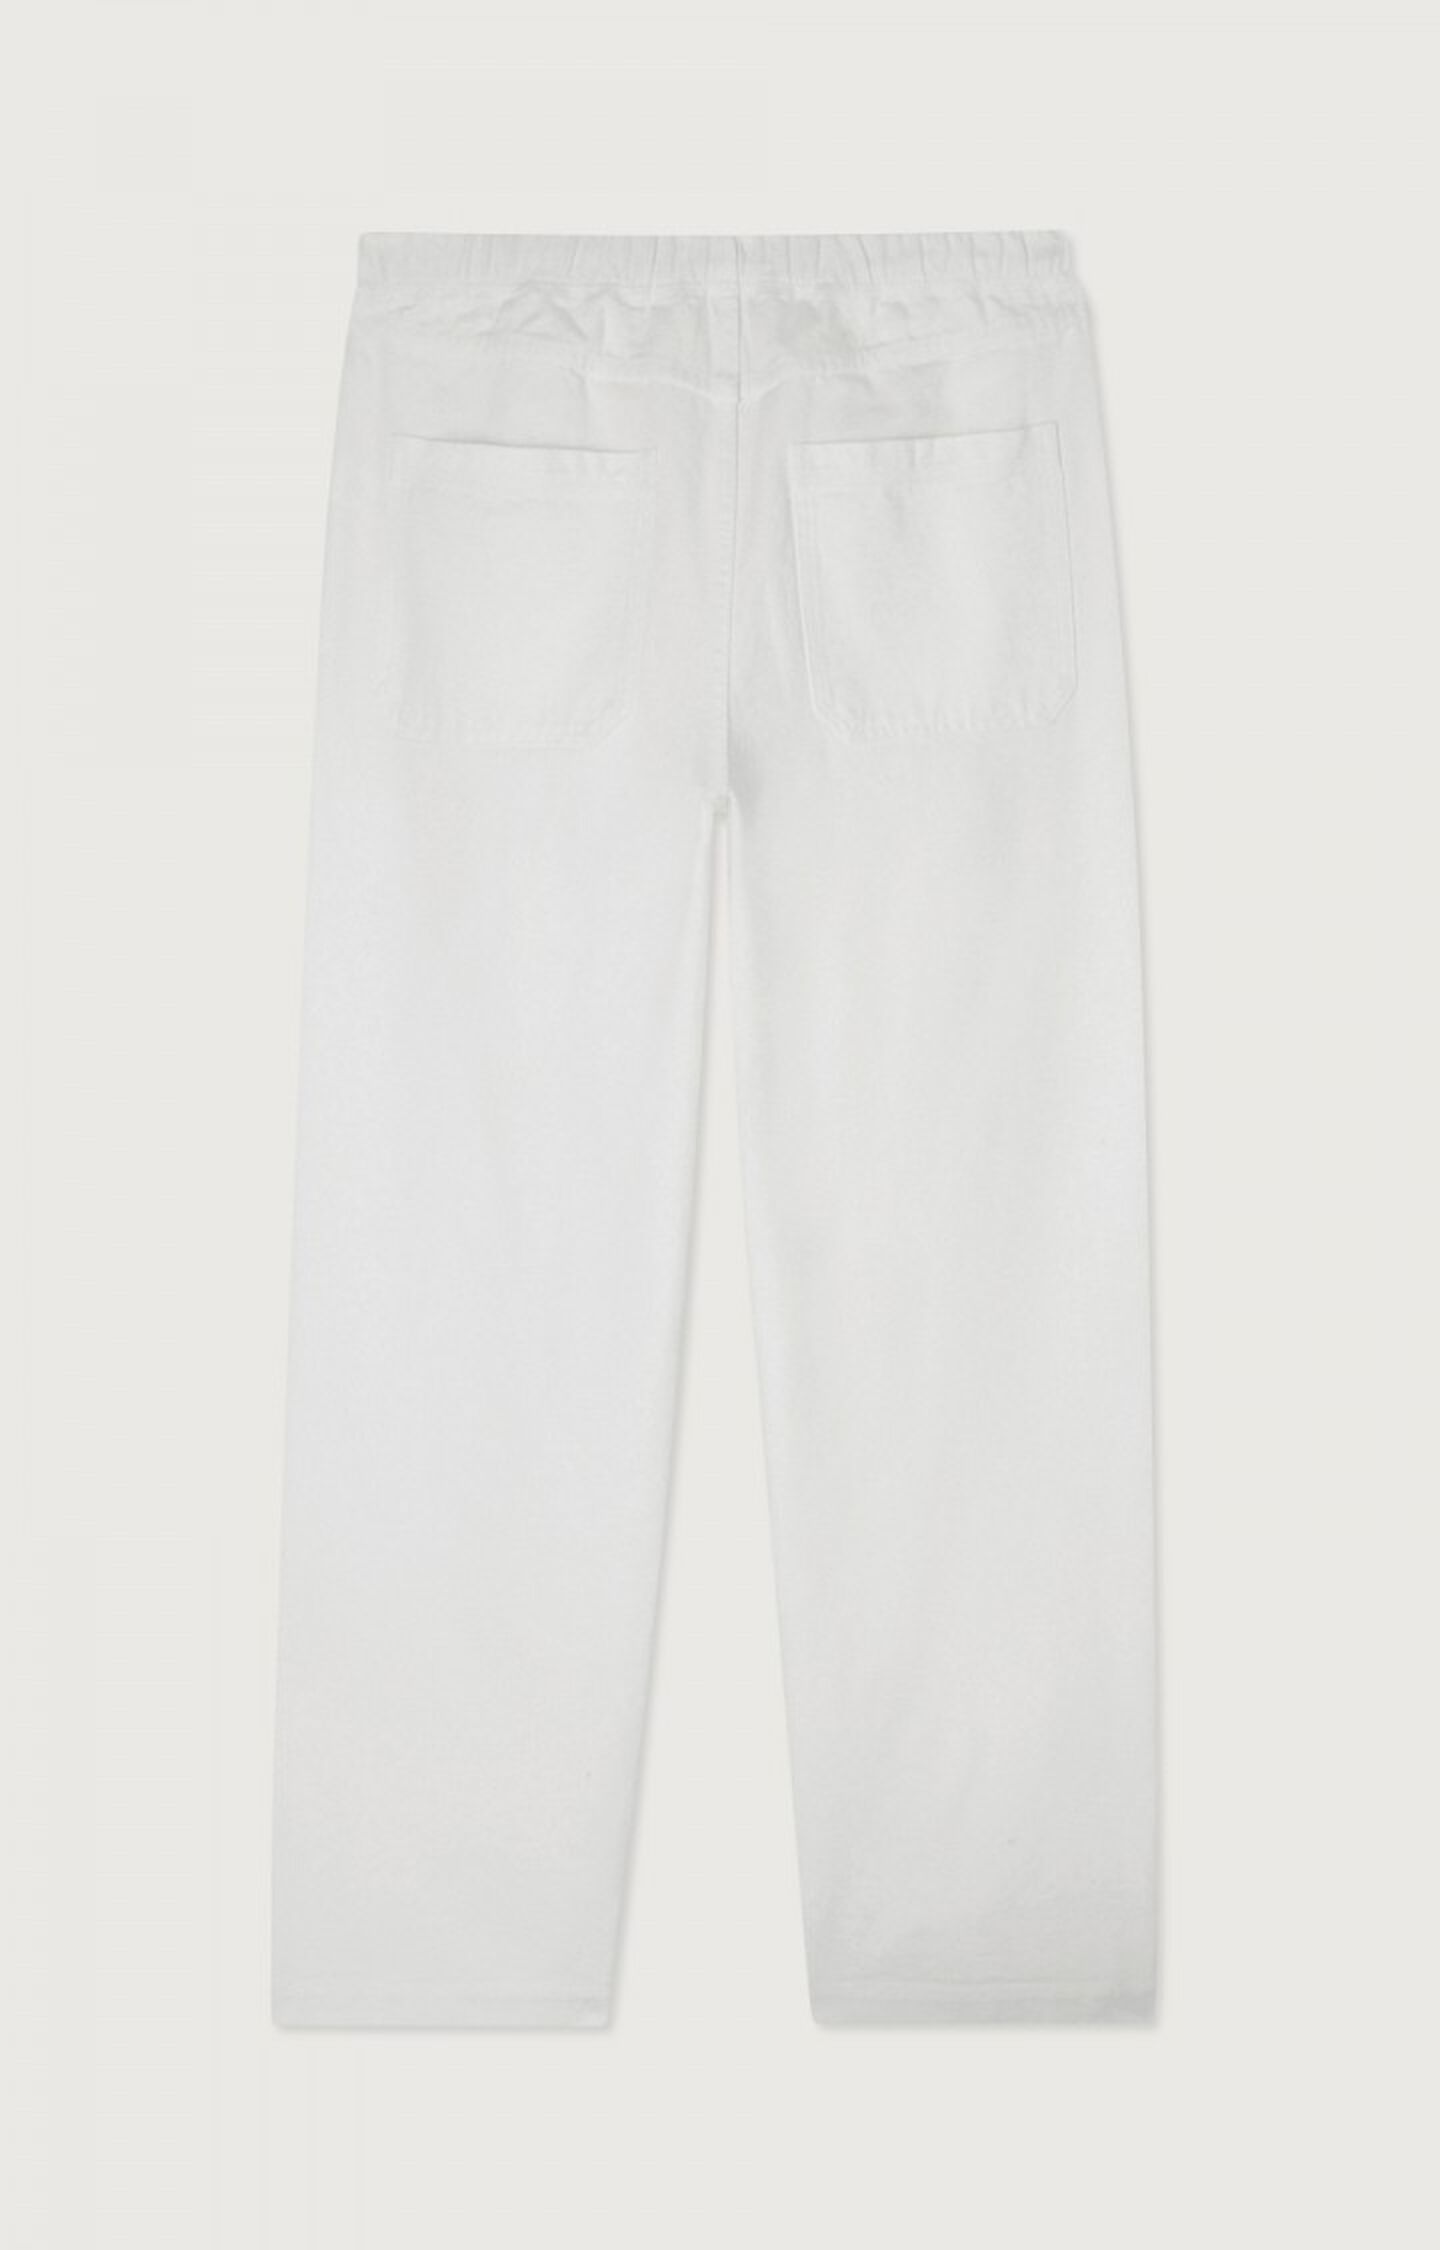 Pantalon homme Giony - BLANC Blanc - E21